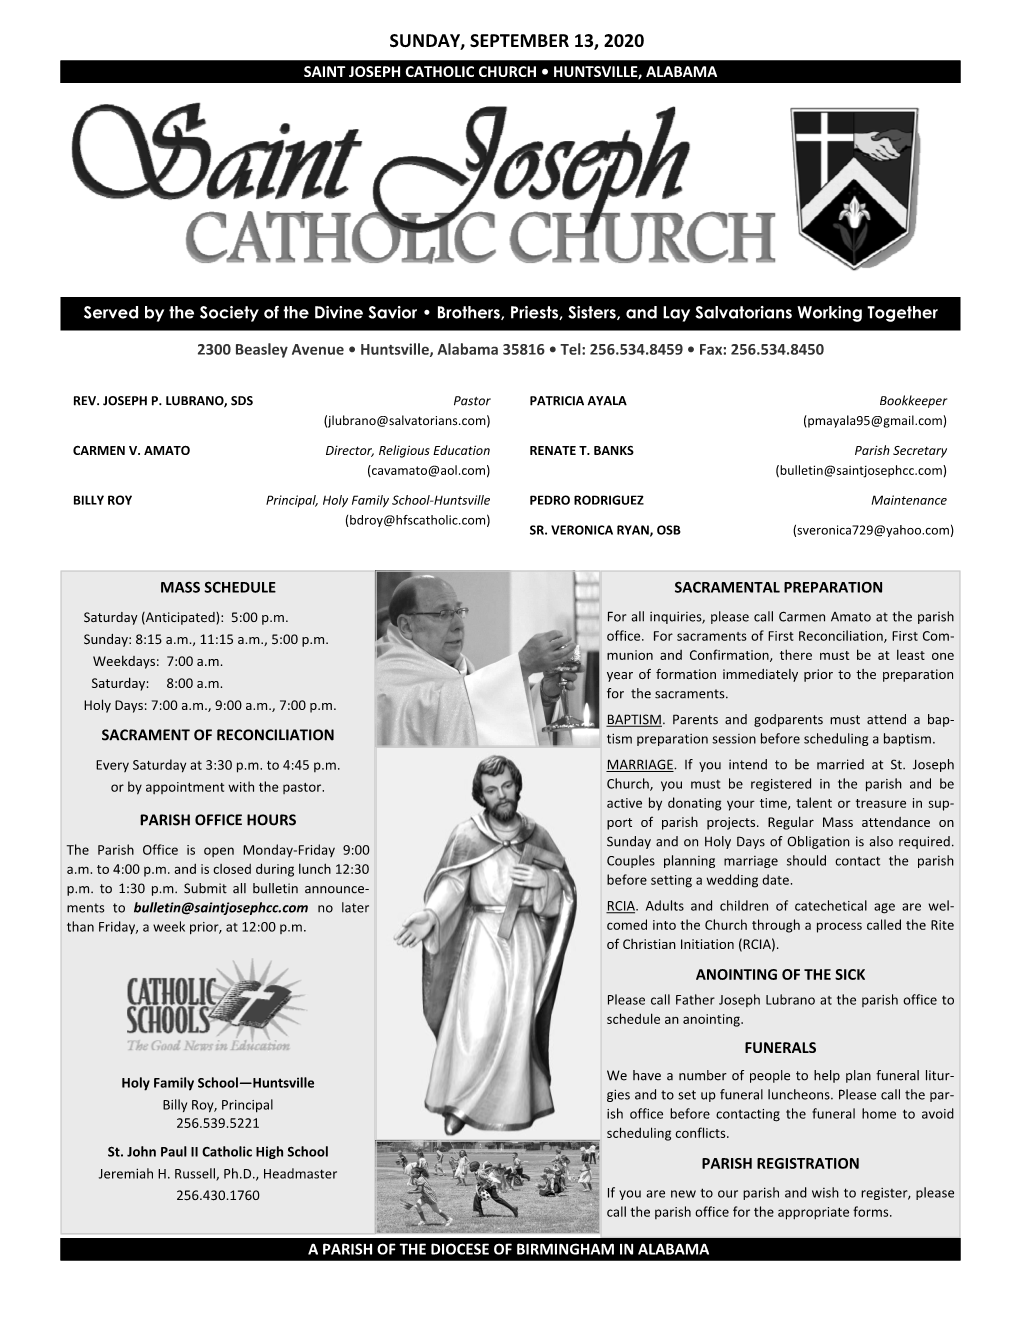 Sunday, September 13, 2020 Saint Joseph Catholic Church • Huntsville, Alabama